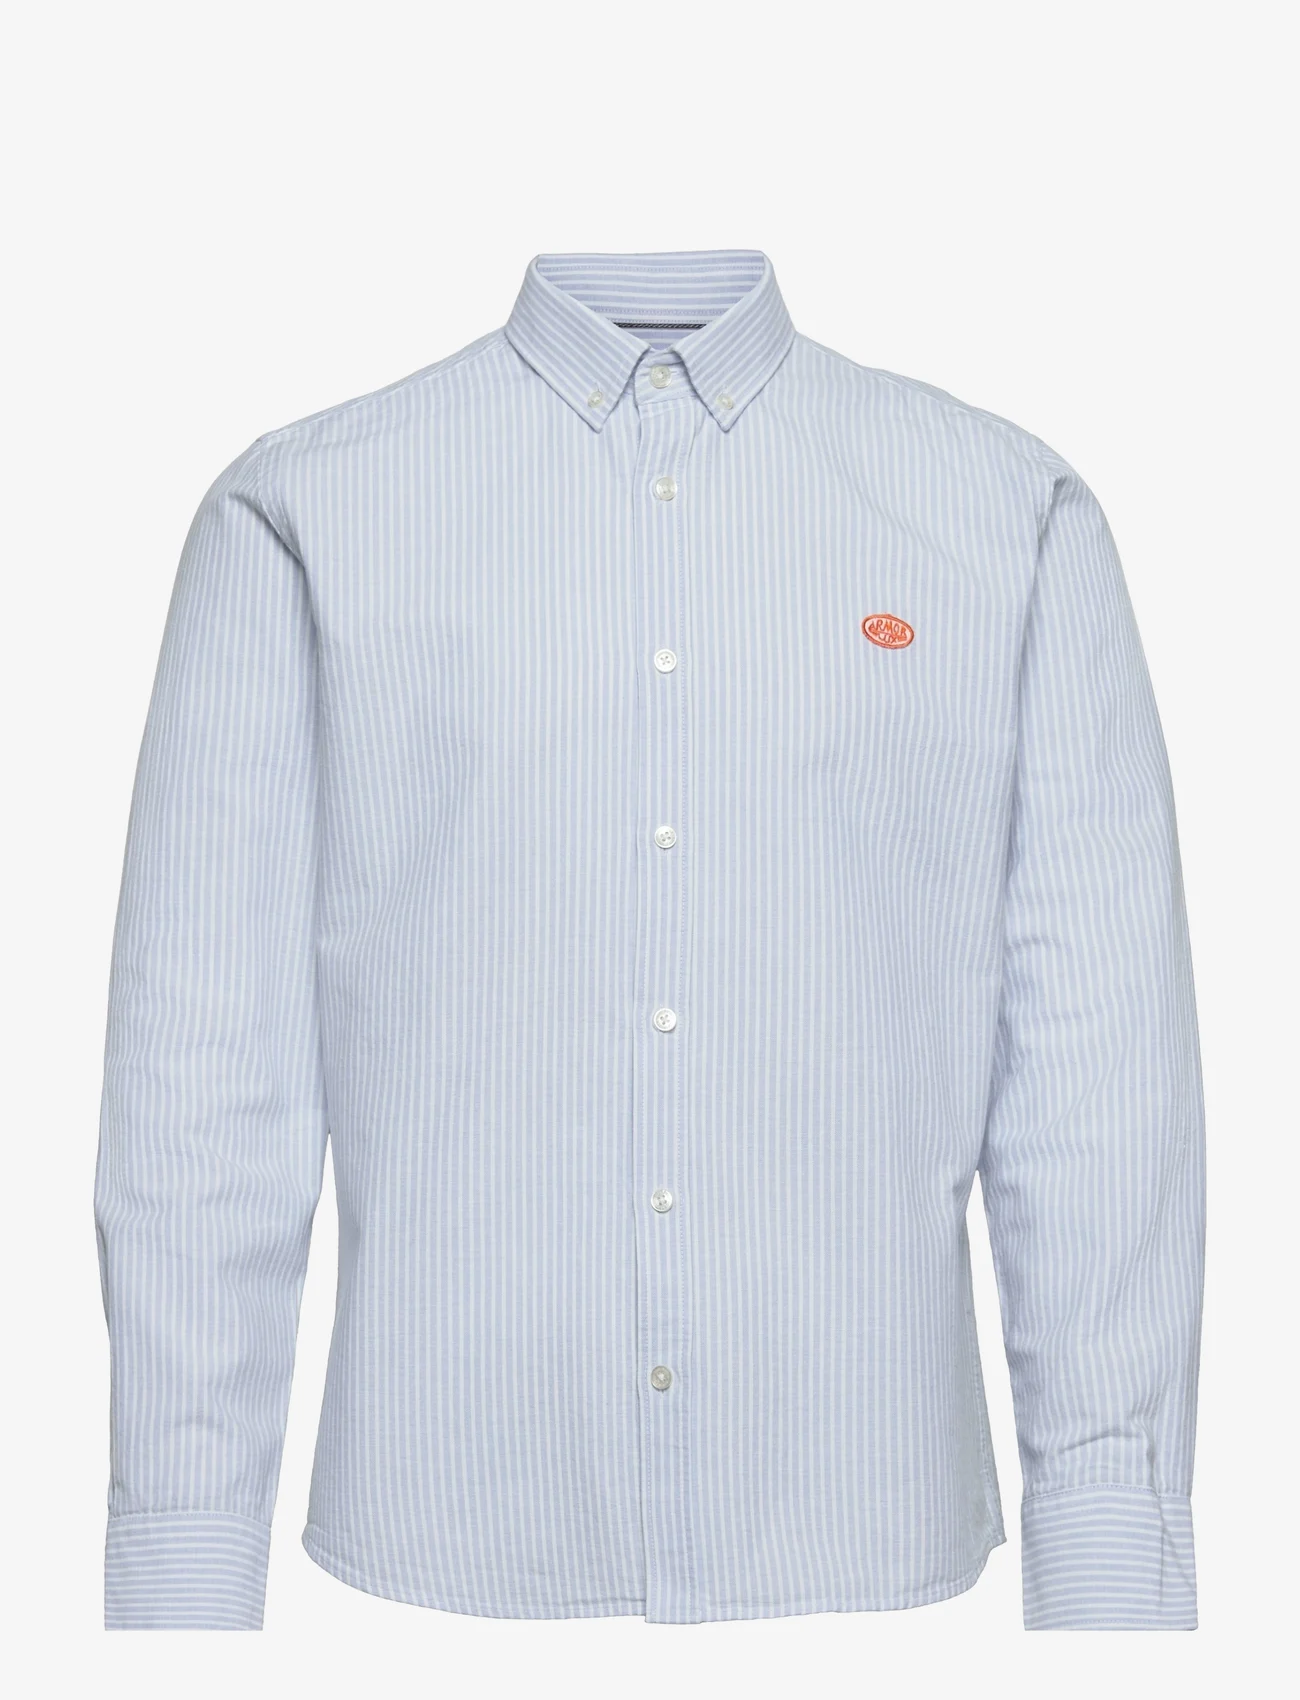 Armor Lux - Oxford shirt - oxford-hemden - sky blue/milk - 0